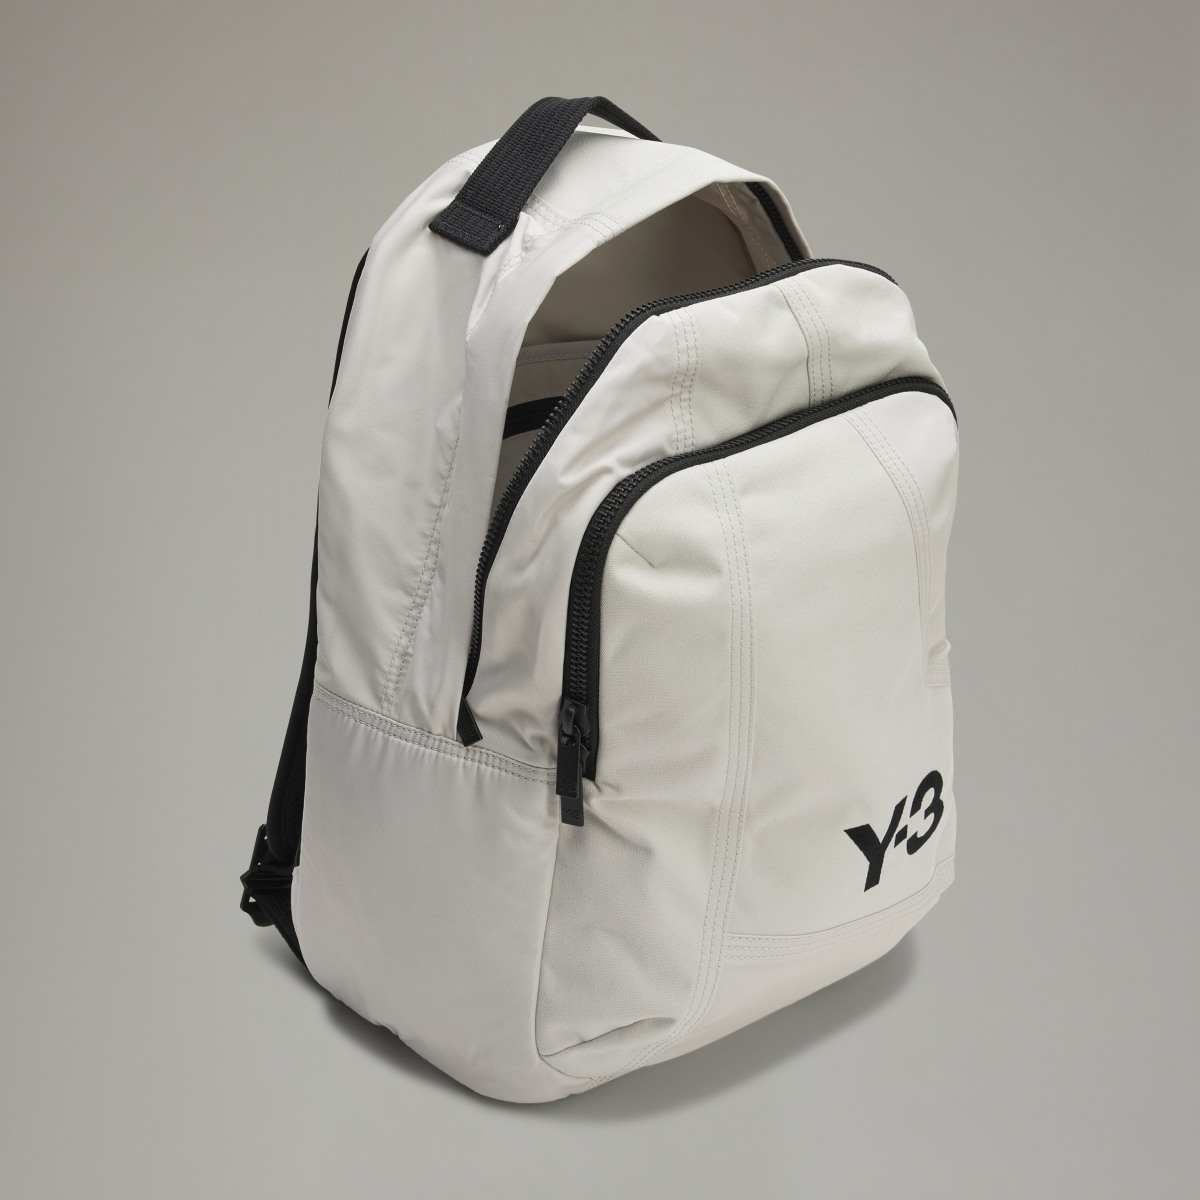 Adidas Y-3 Classic Backpack. 5